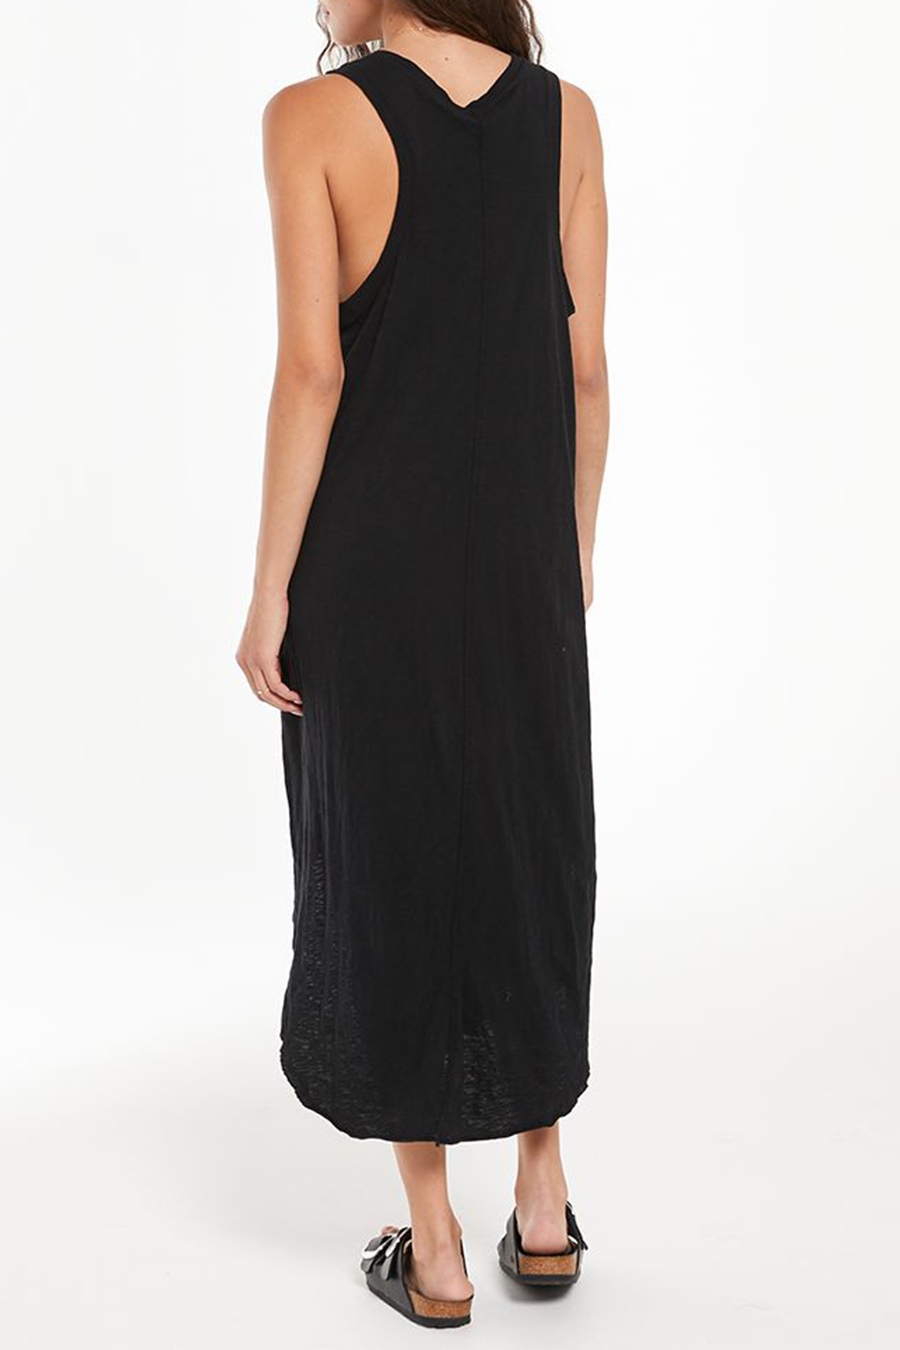 Reverie Dress | Black - Main Image Number 2 of 3